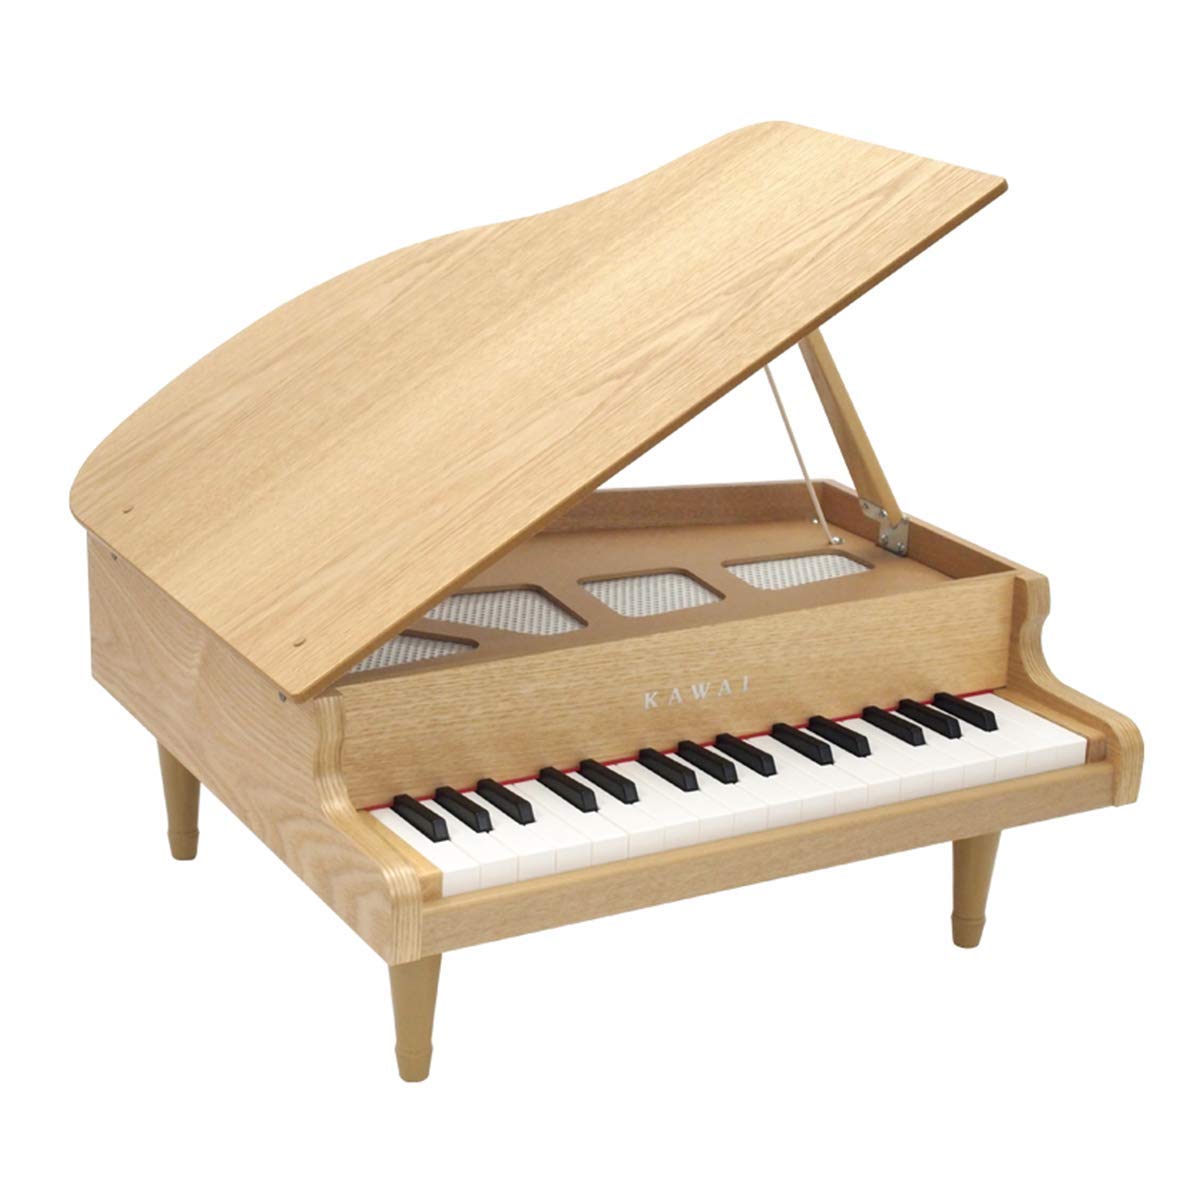 Kawai musical instruments Mfg. ナチュラルカワイグランドピアノ